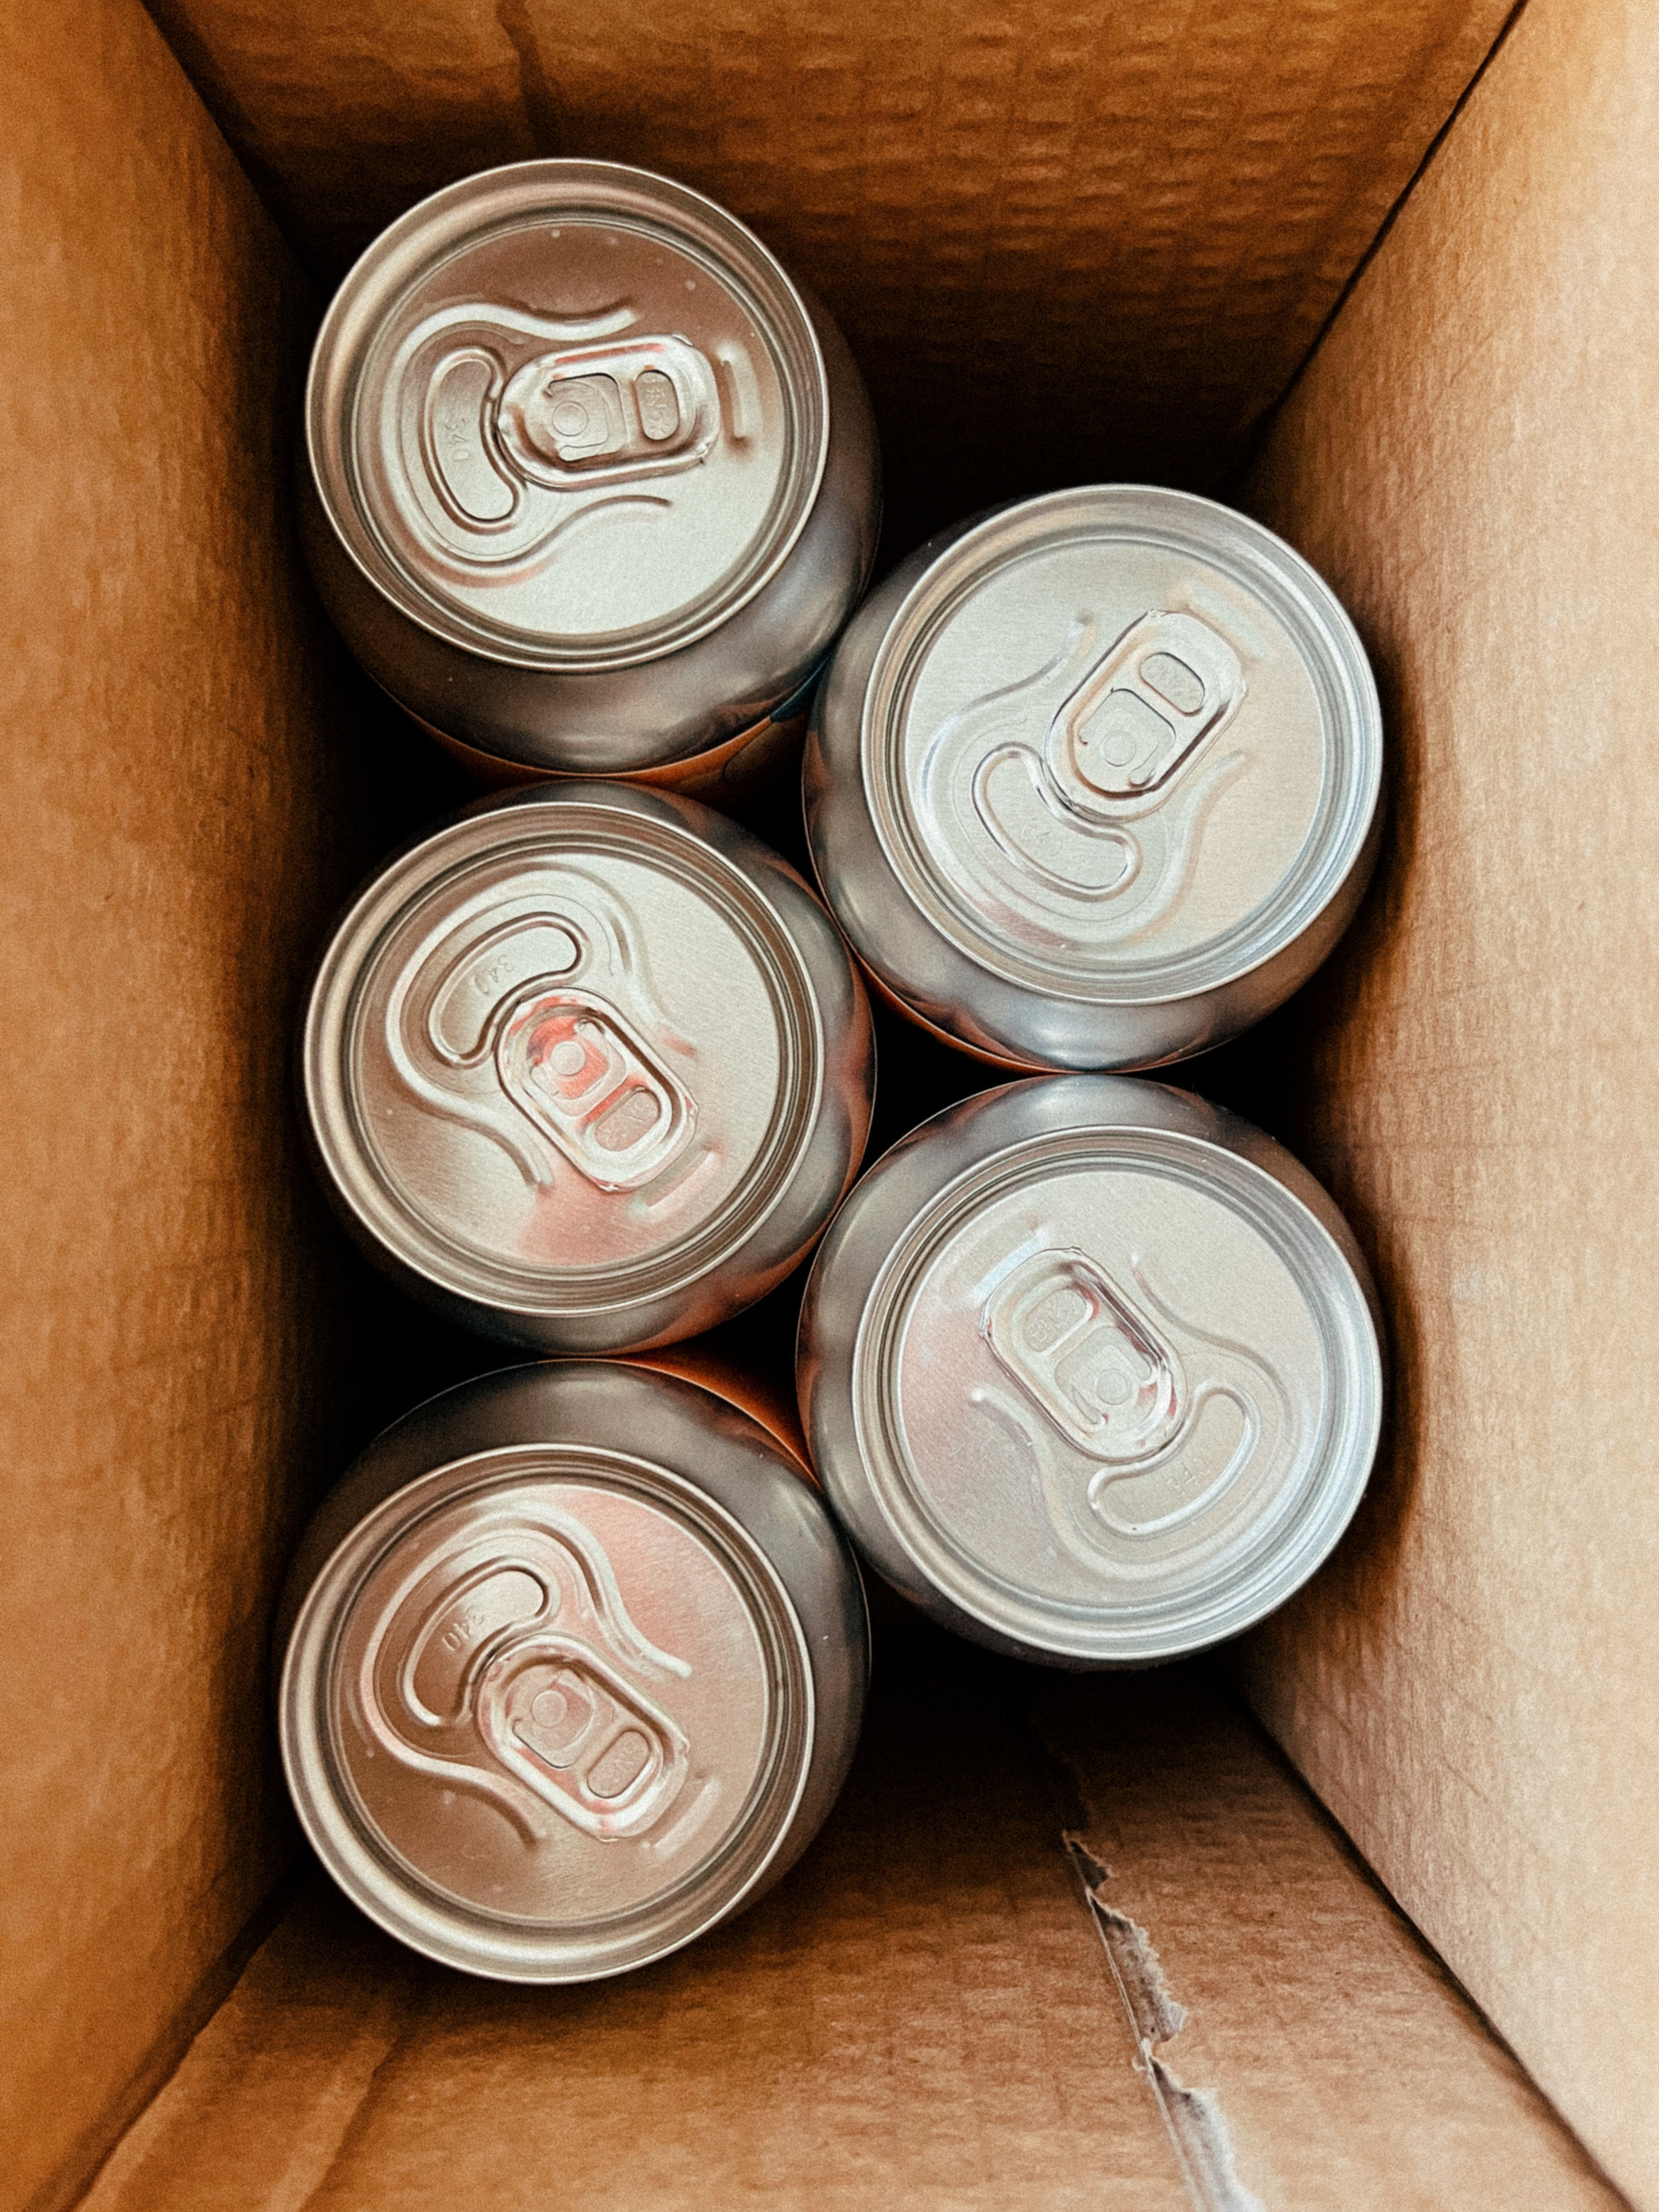 Five cans inside a cardboard box. 